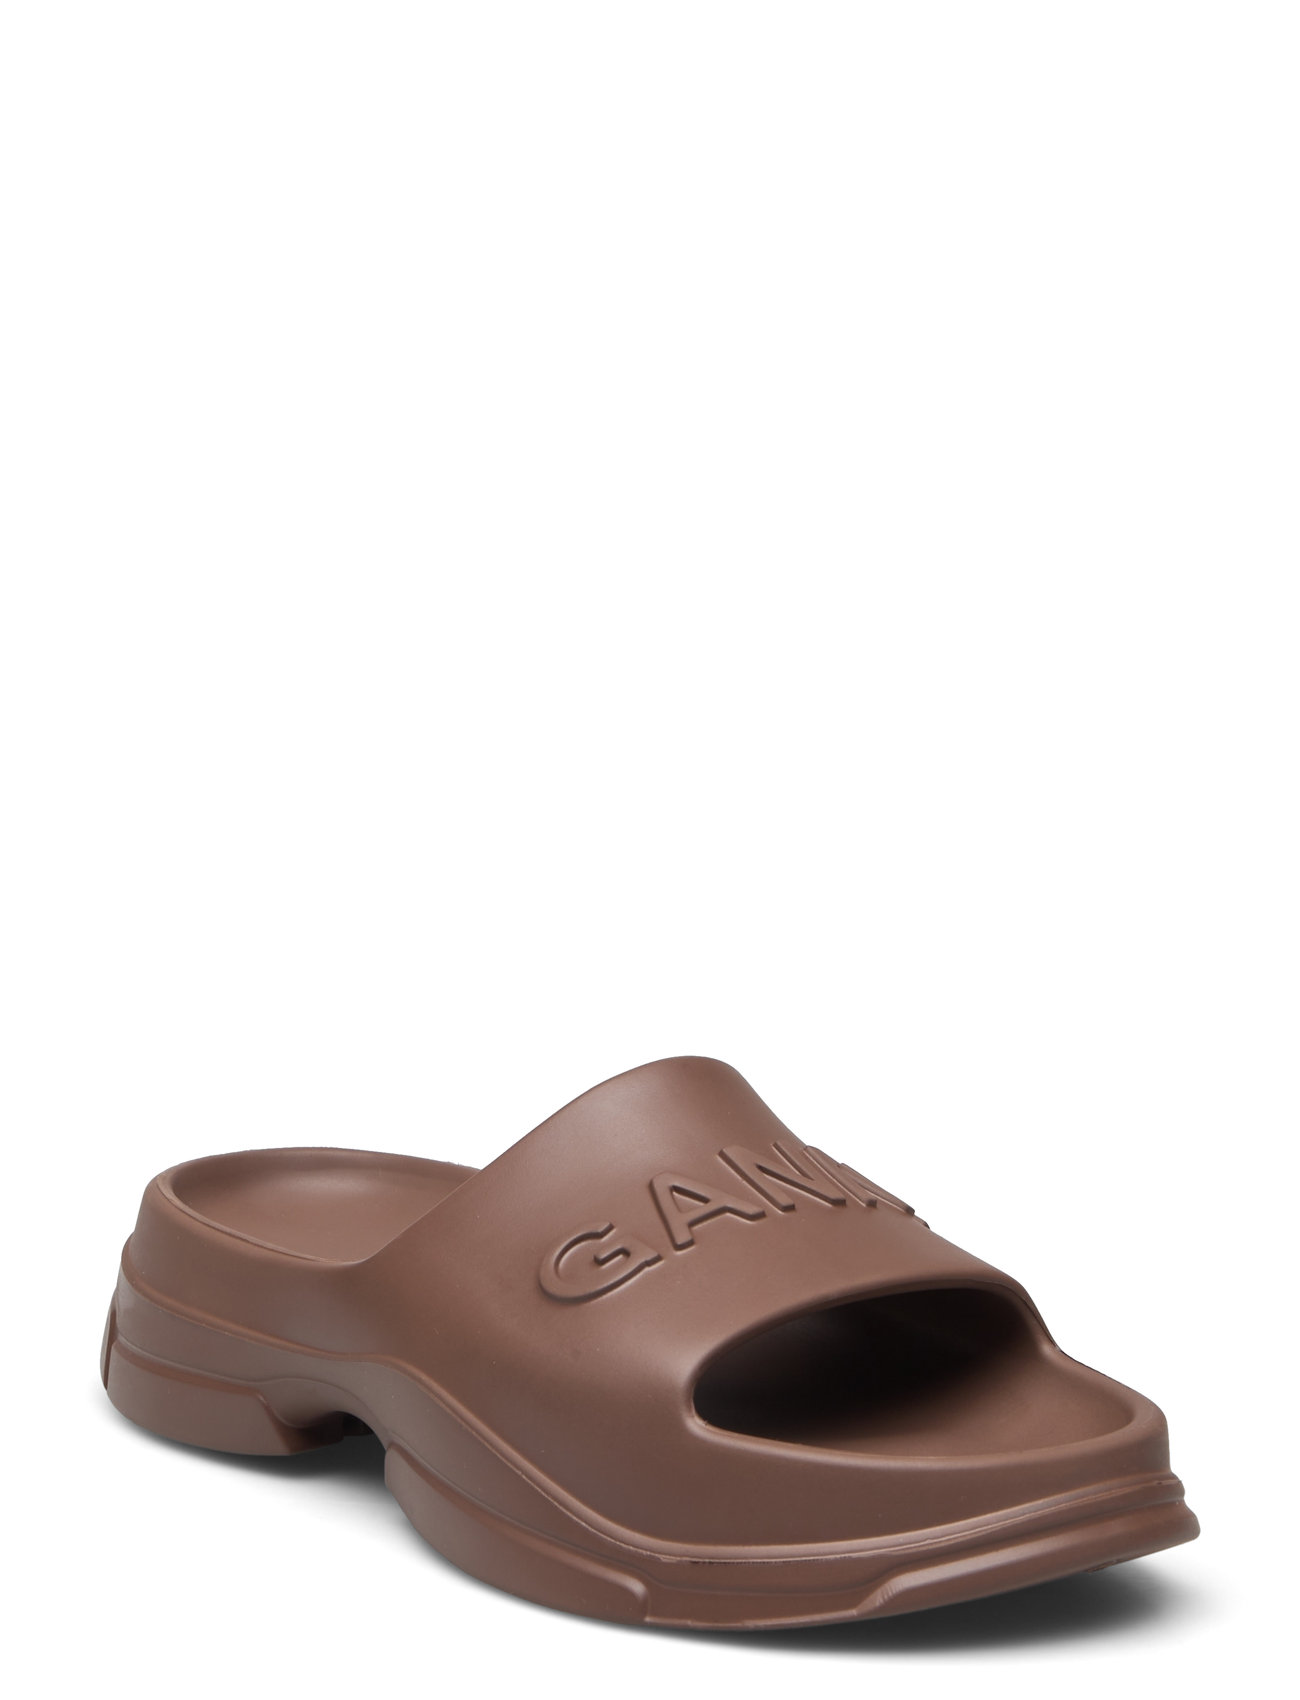 Light Weight Designers Summer Shoes Sandals Pool Sliders Brown Ganni